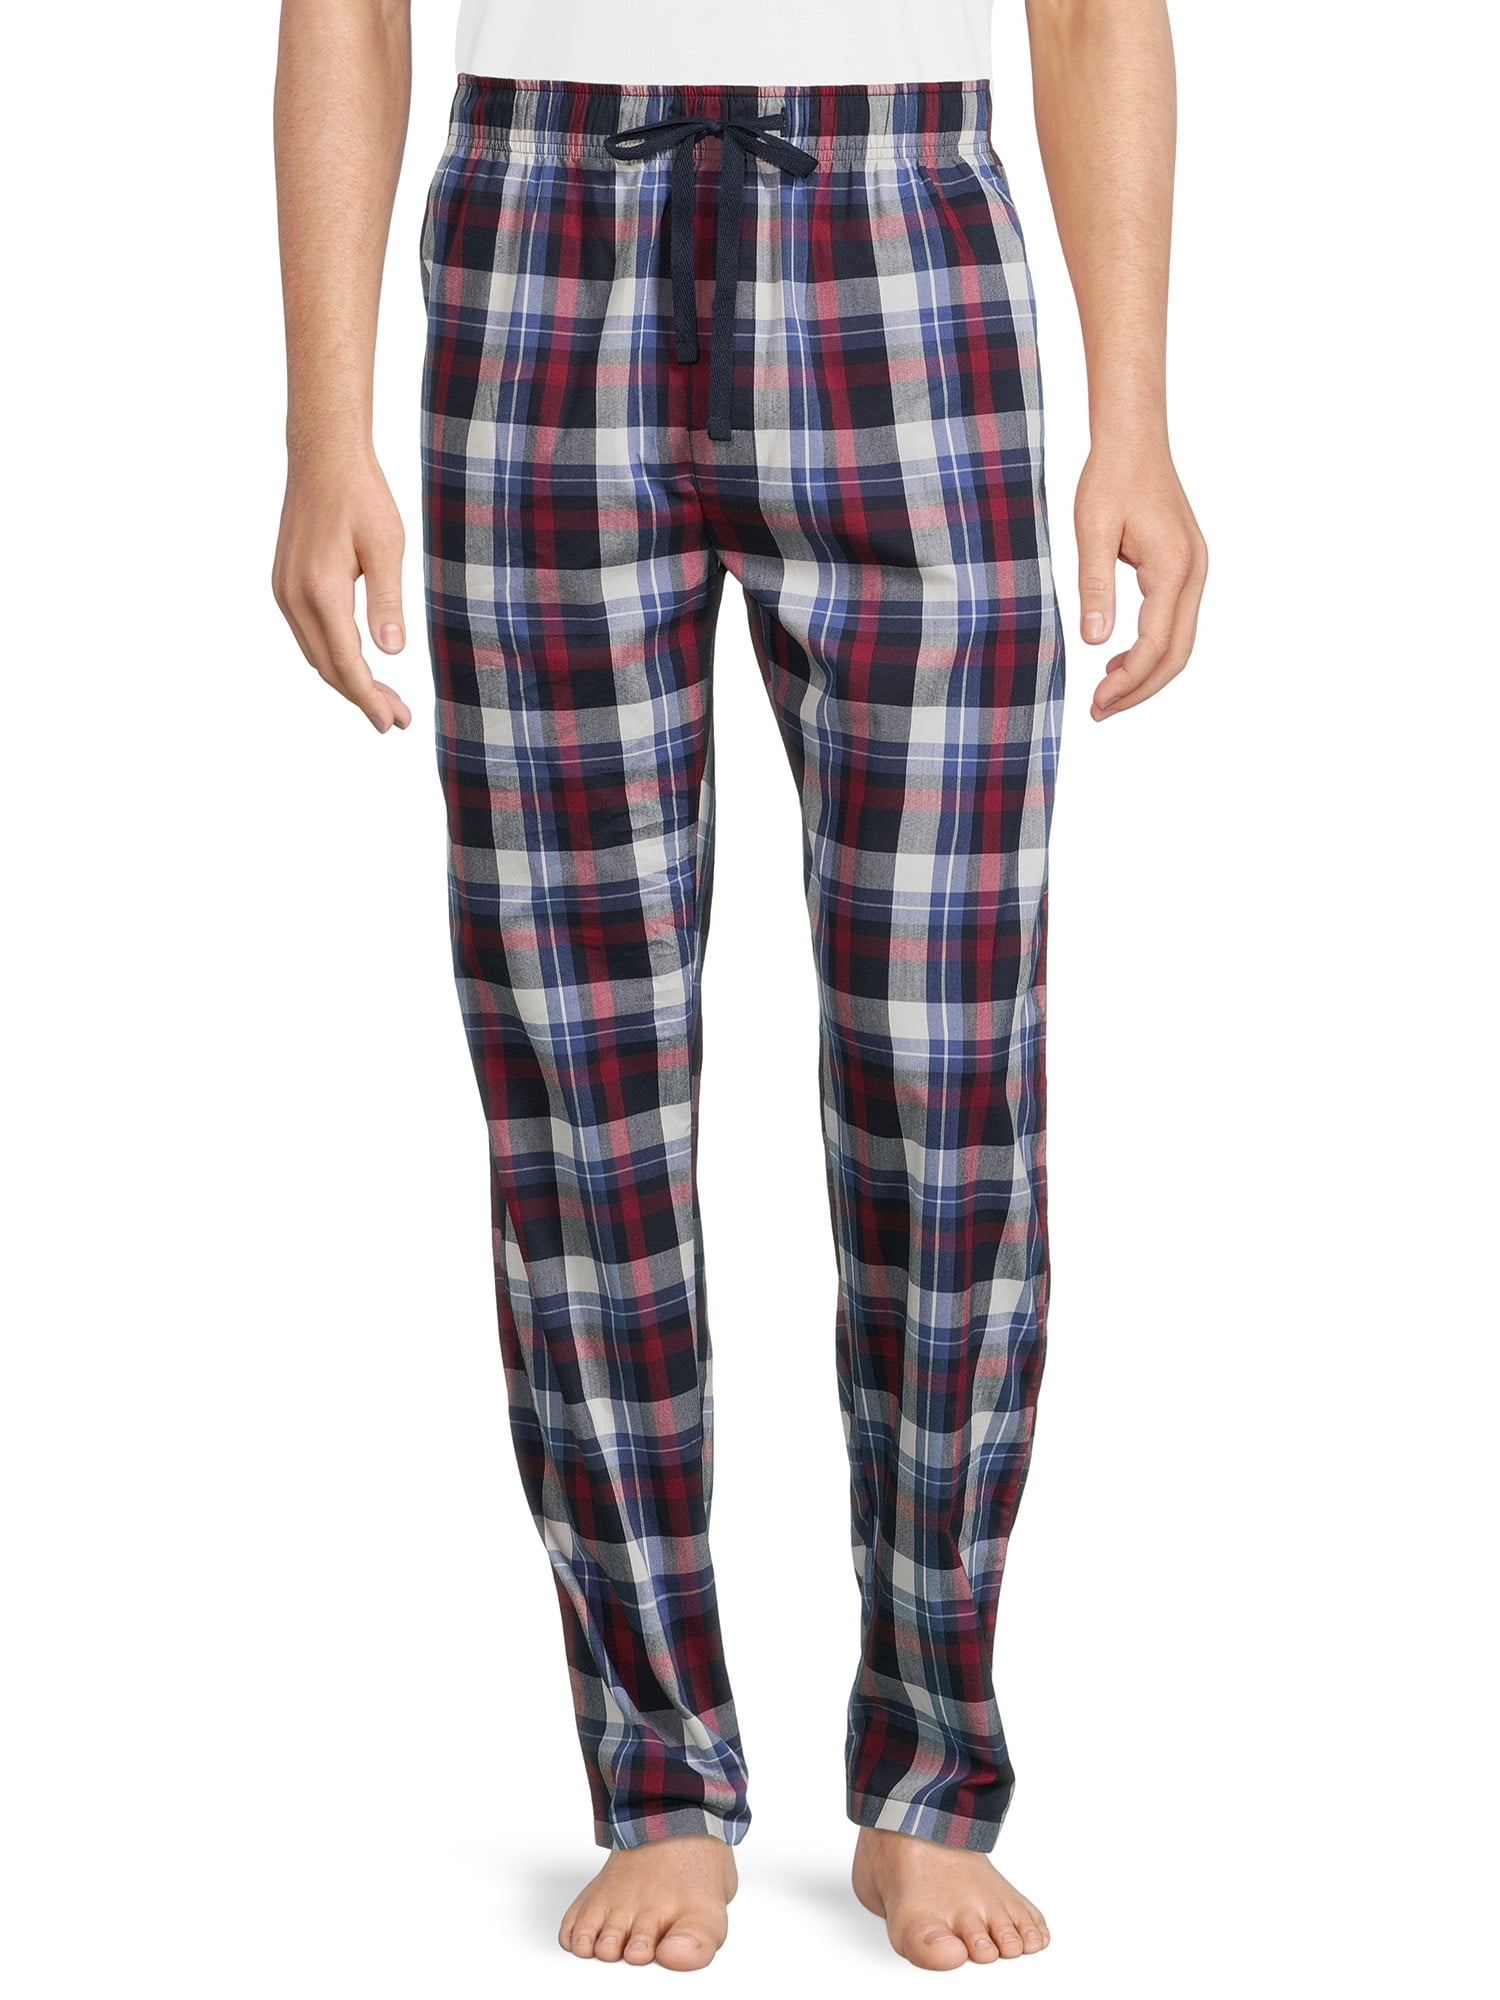 Hanes Men's Woven Sleep Pants, Size S-2XL - Walmart.com